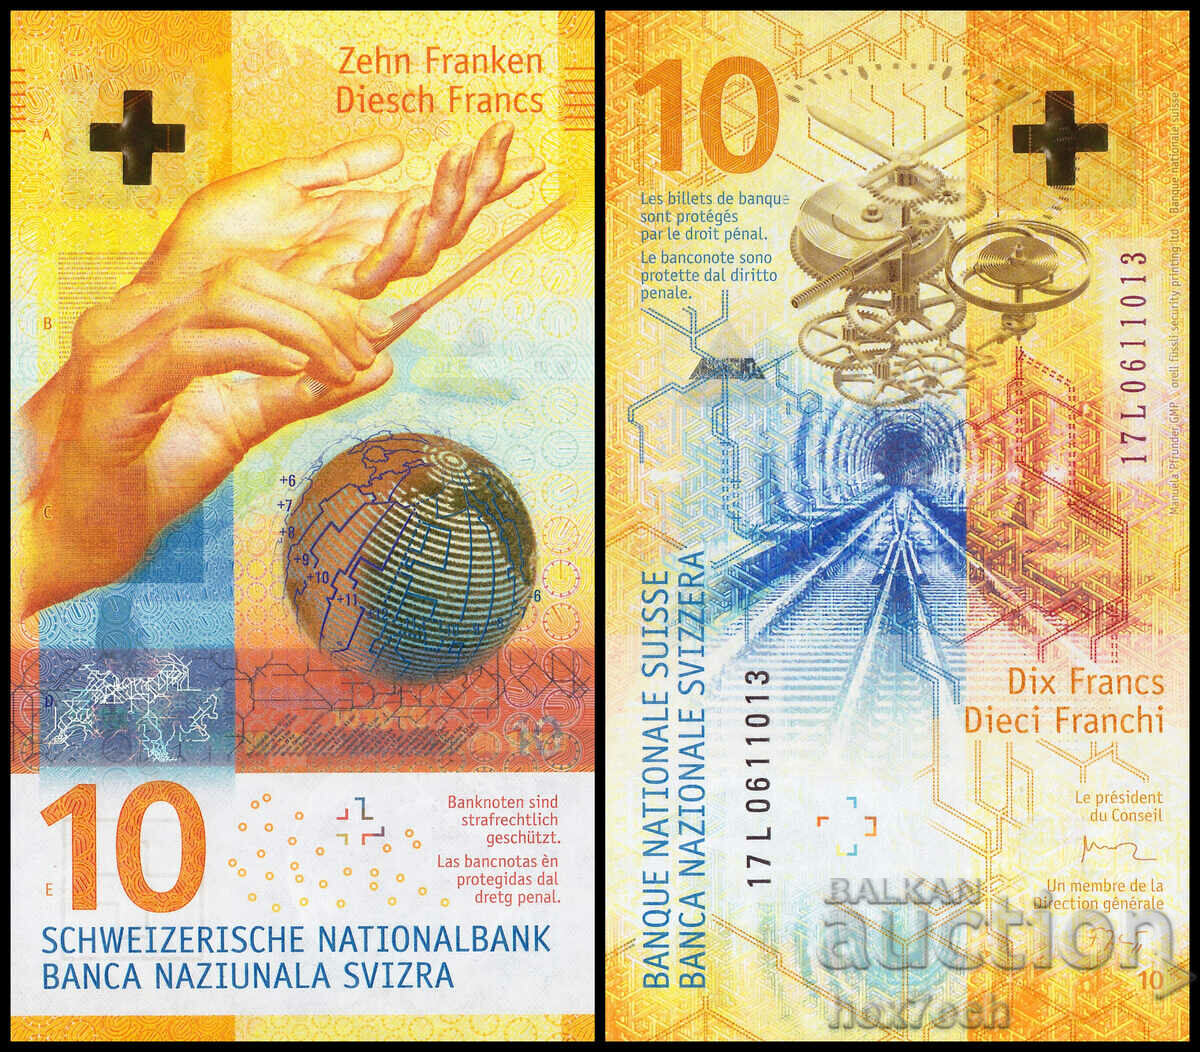 ❤️ ⭐ Switzerland 2017 10 francs UNC new ⭐ ❤️